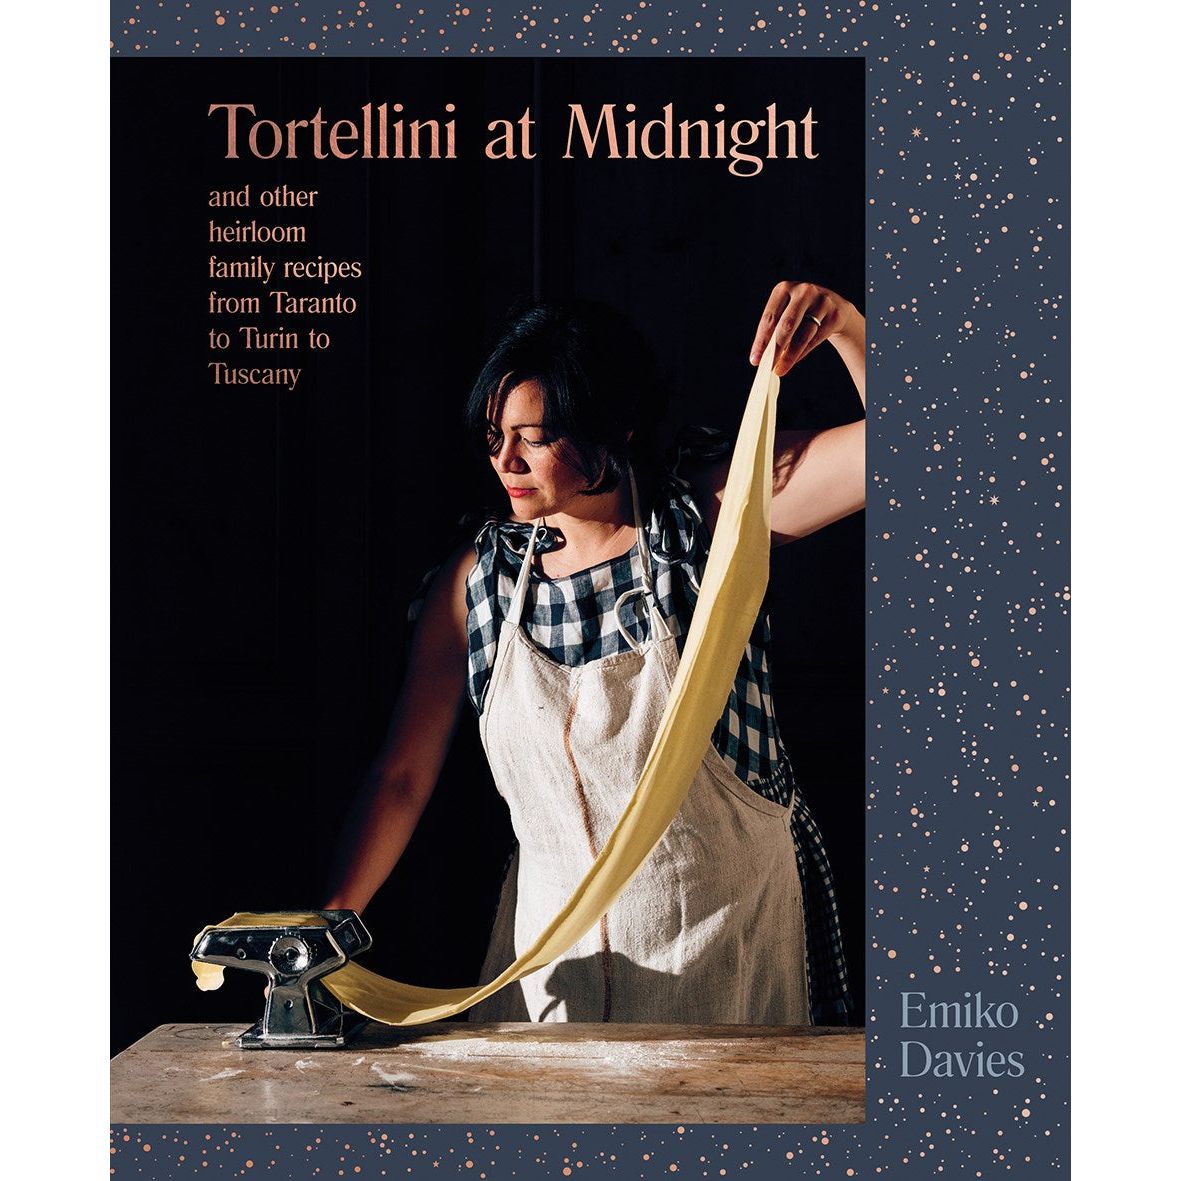 Tortellini at Midnight (Emiko Davies)